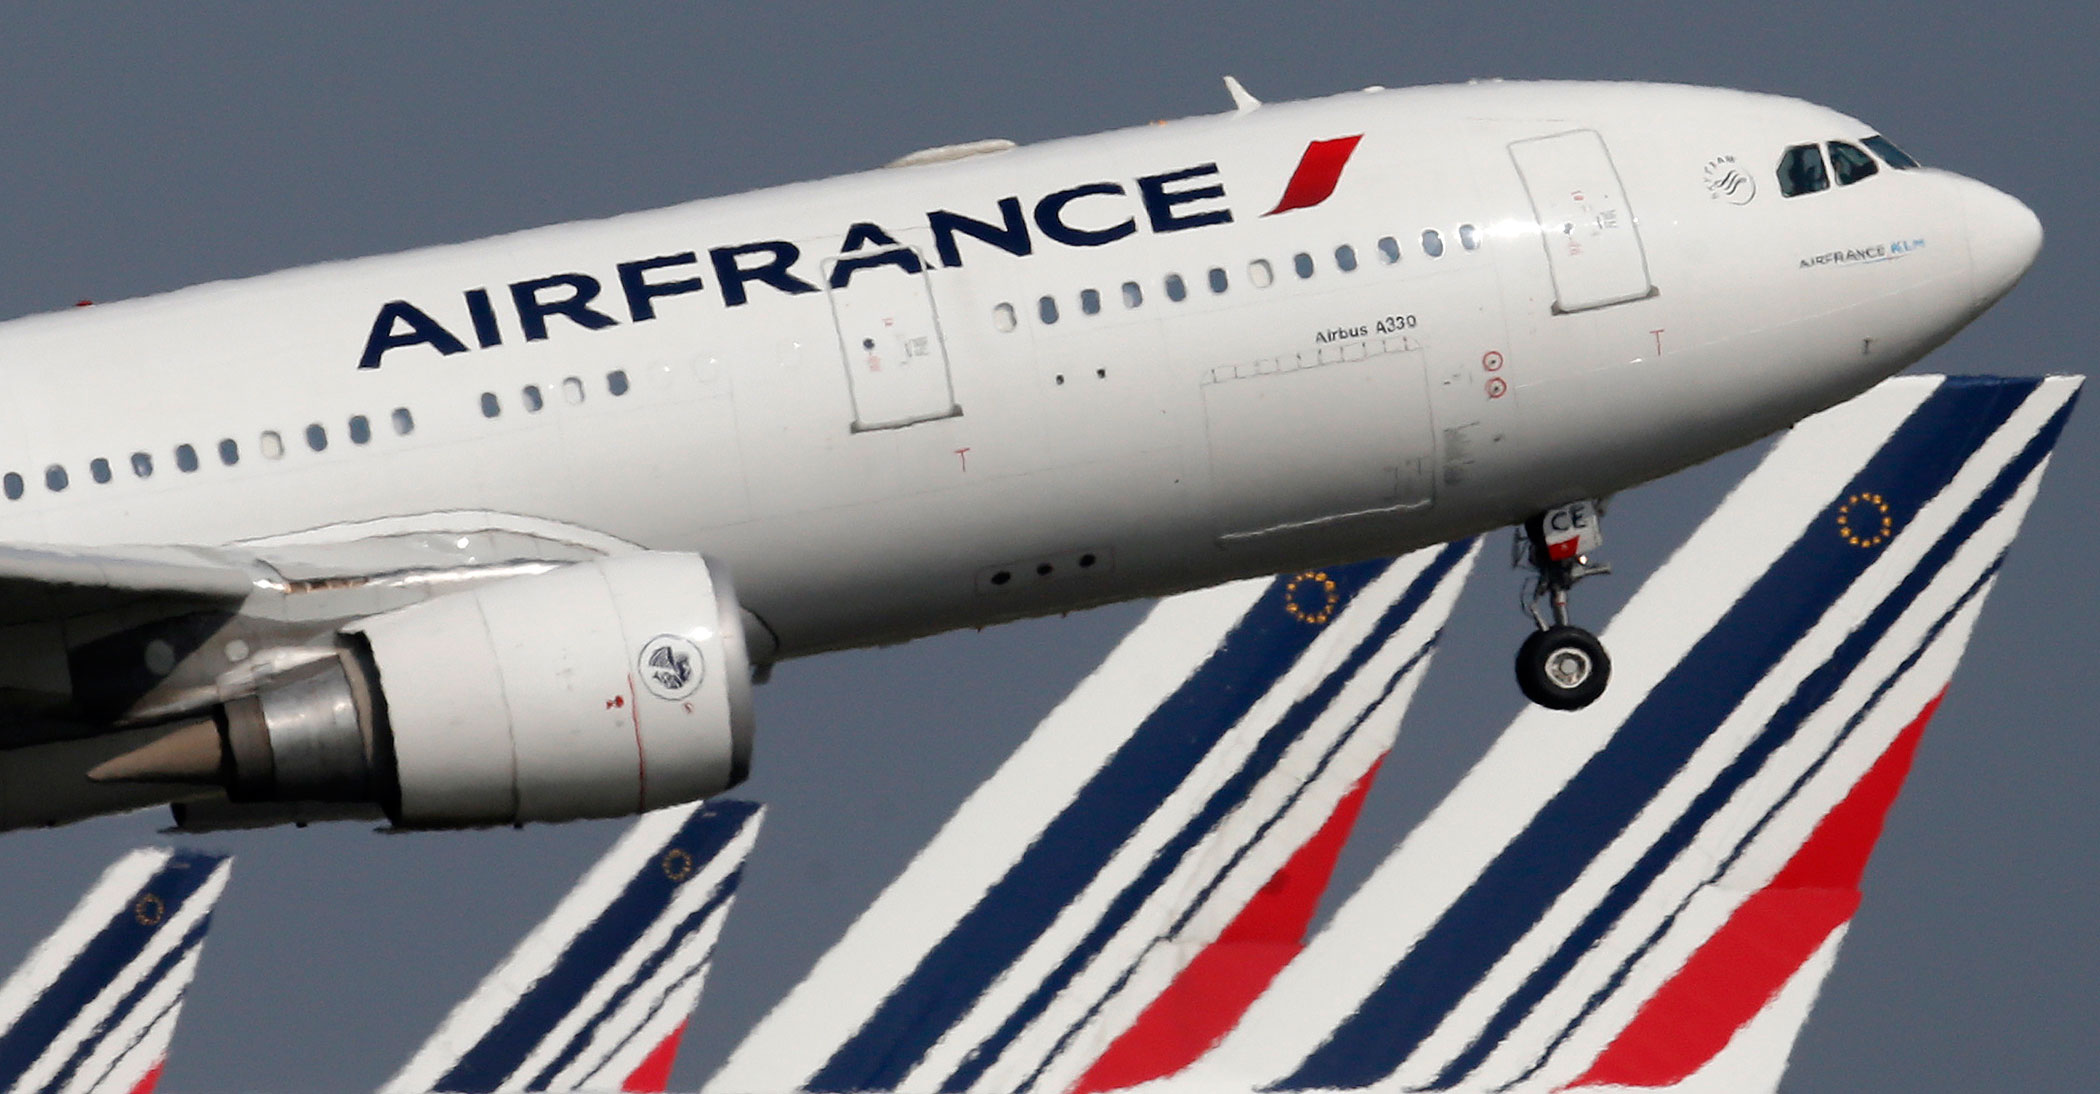 An Air France aircraft takes off at Charles de Gaulle Airport, near Paris, on Sept. 14, 2014 (Christian Hartmann—Reuters)